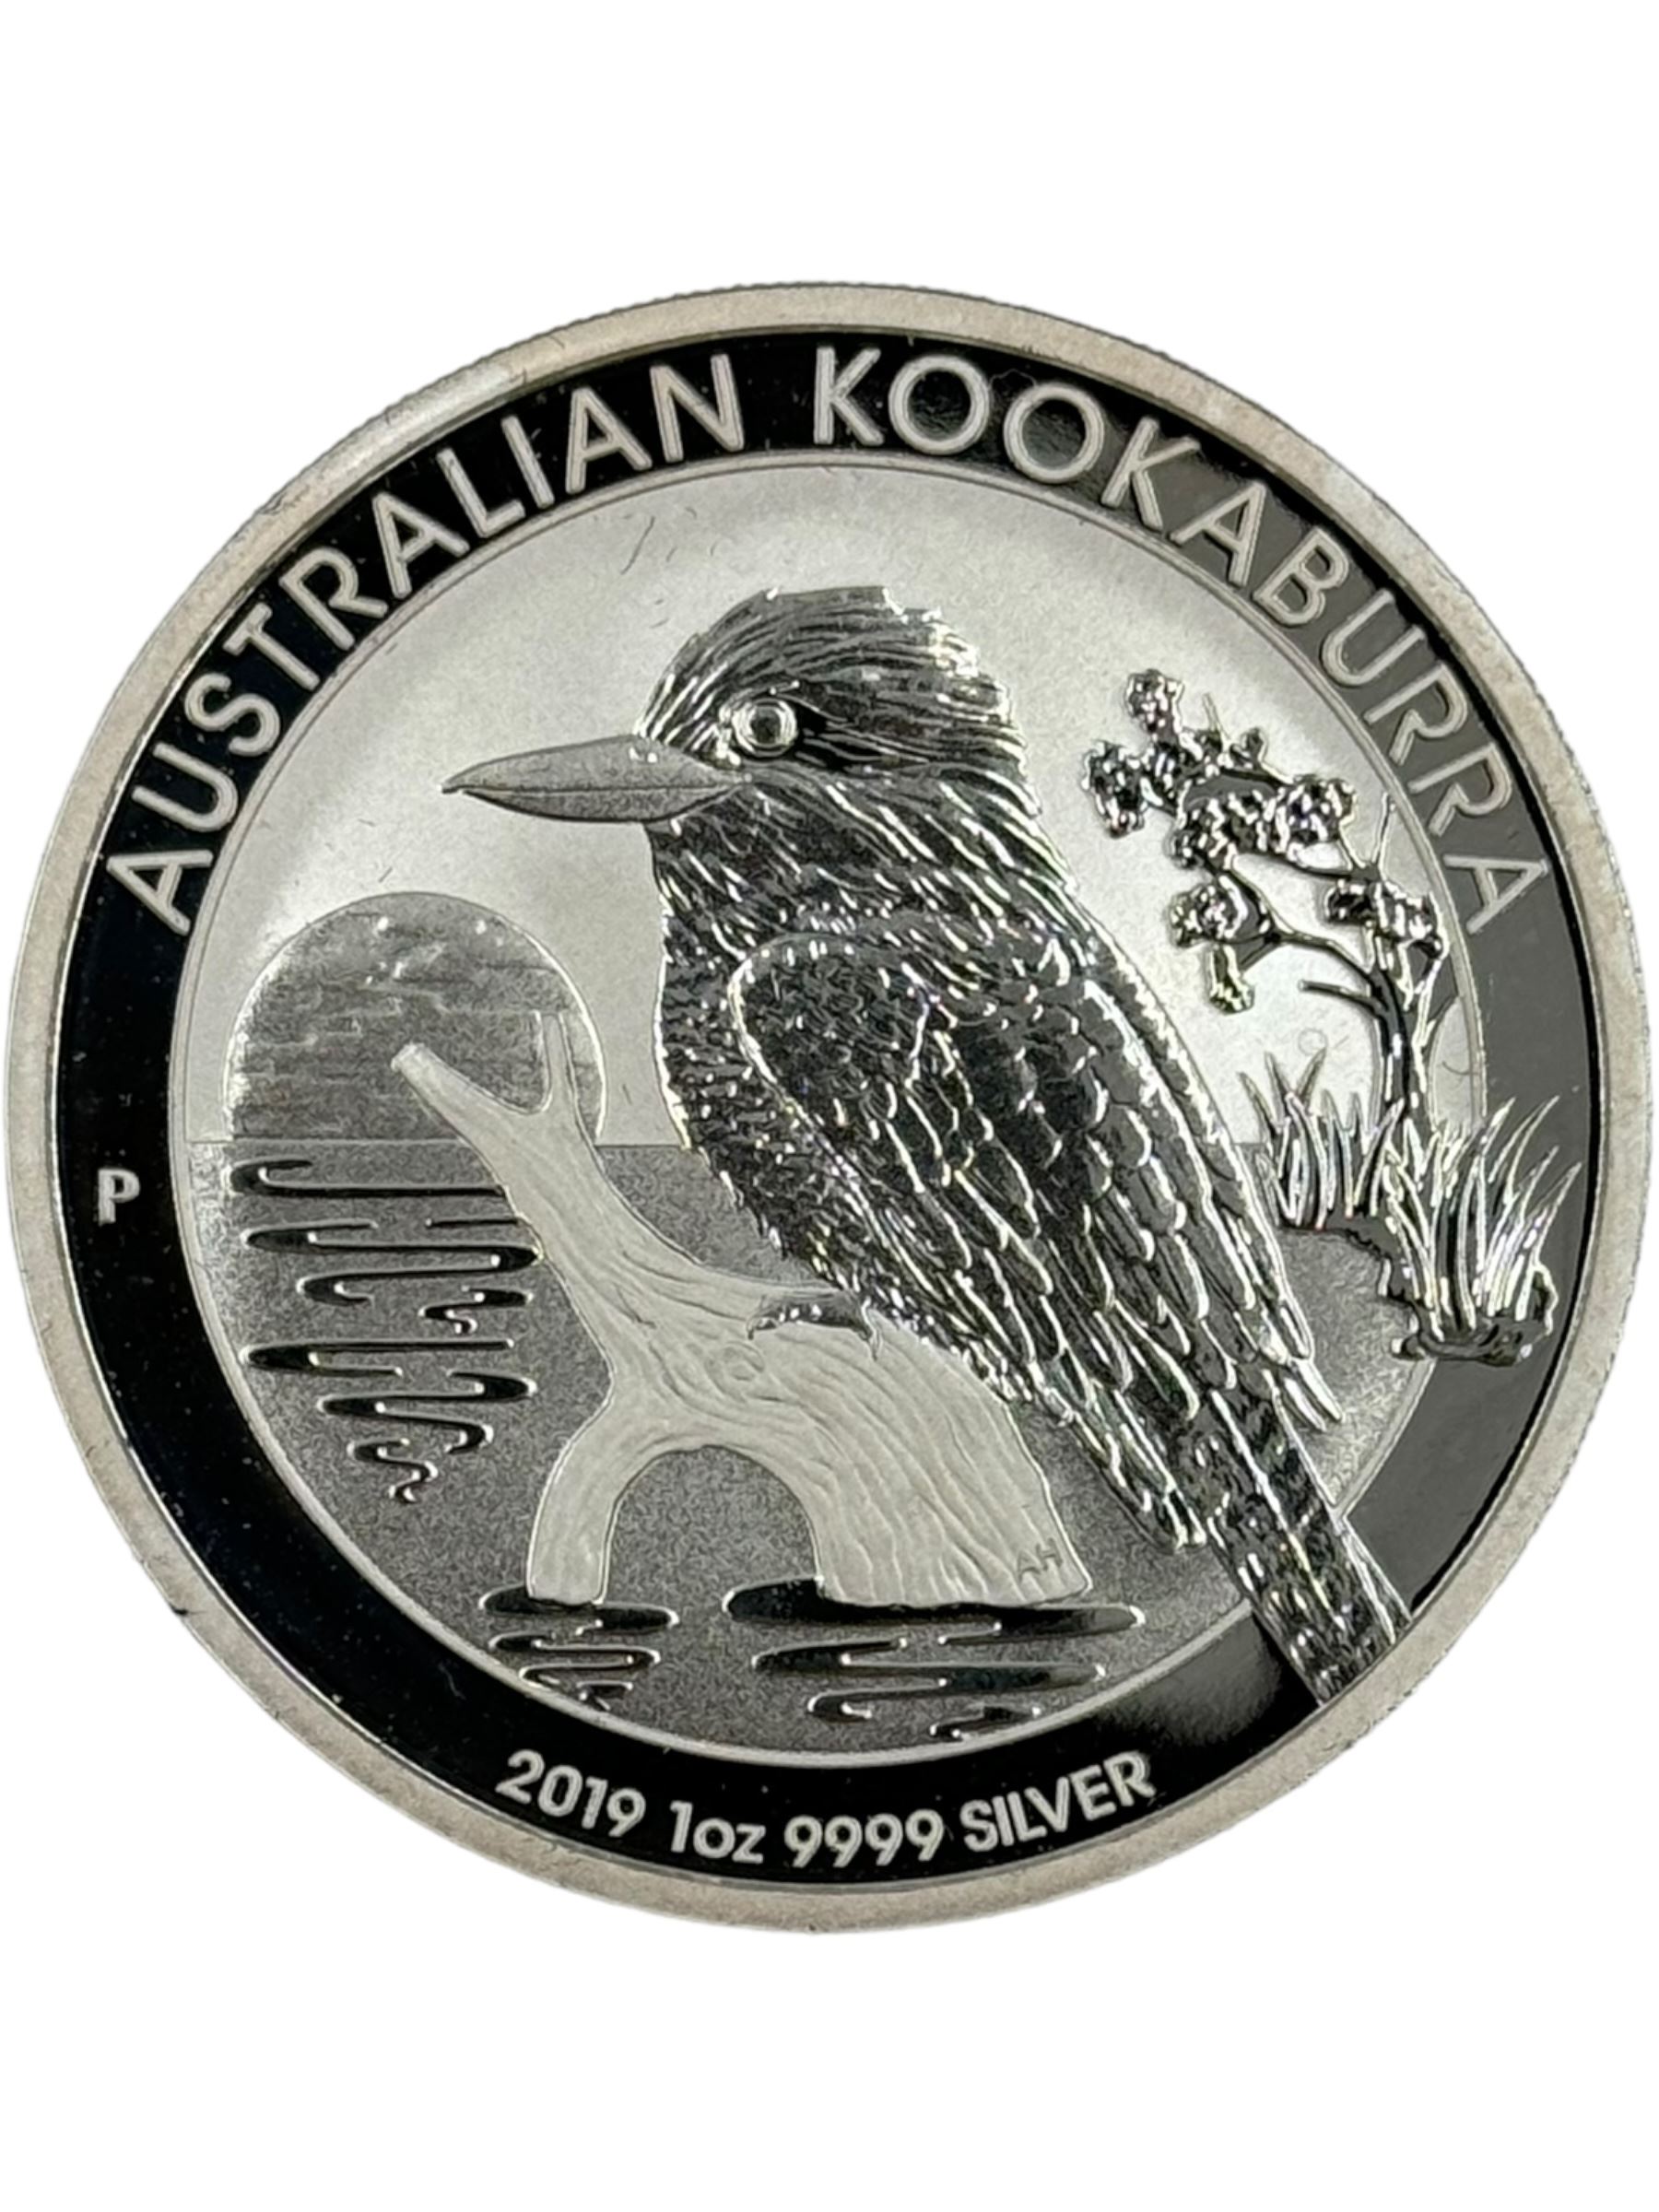 Nine Queen Elizabeth II Australia one ounce fine silver one dollar coins - Image 6 of 8